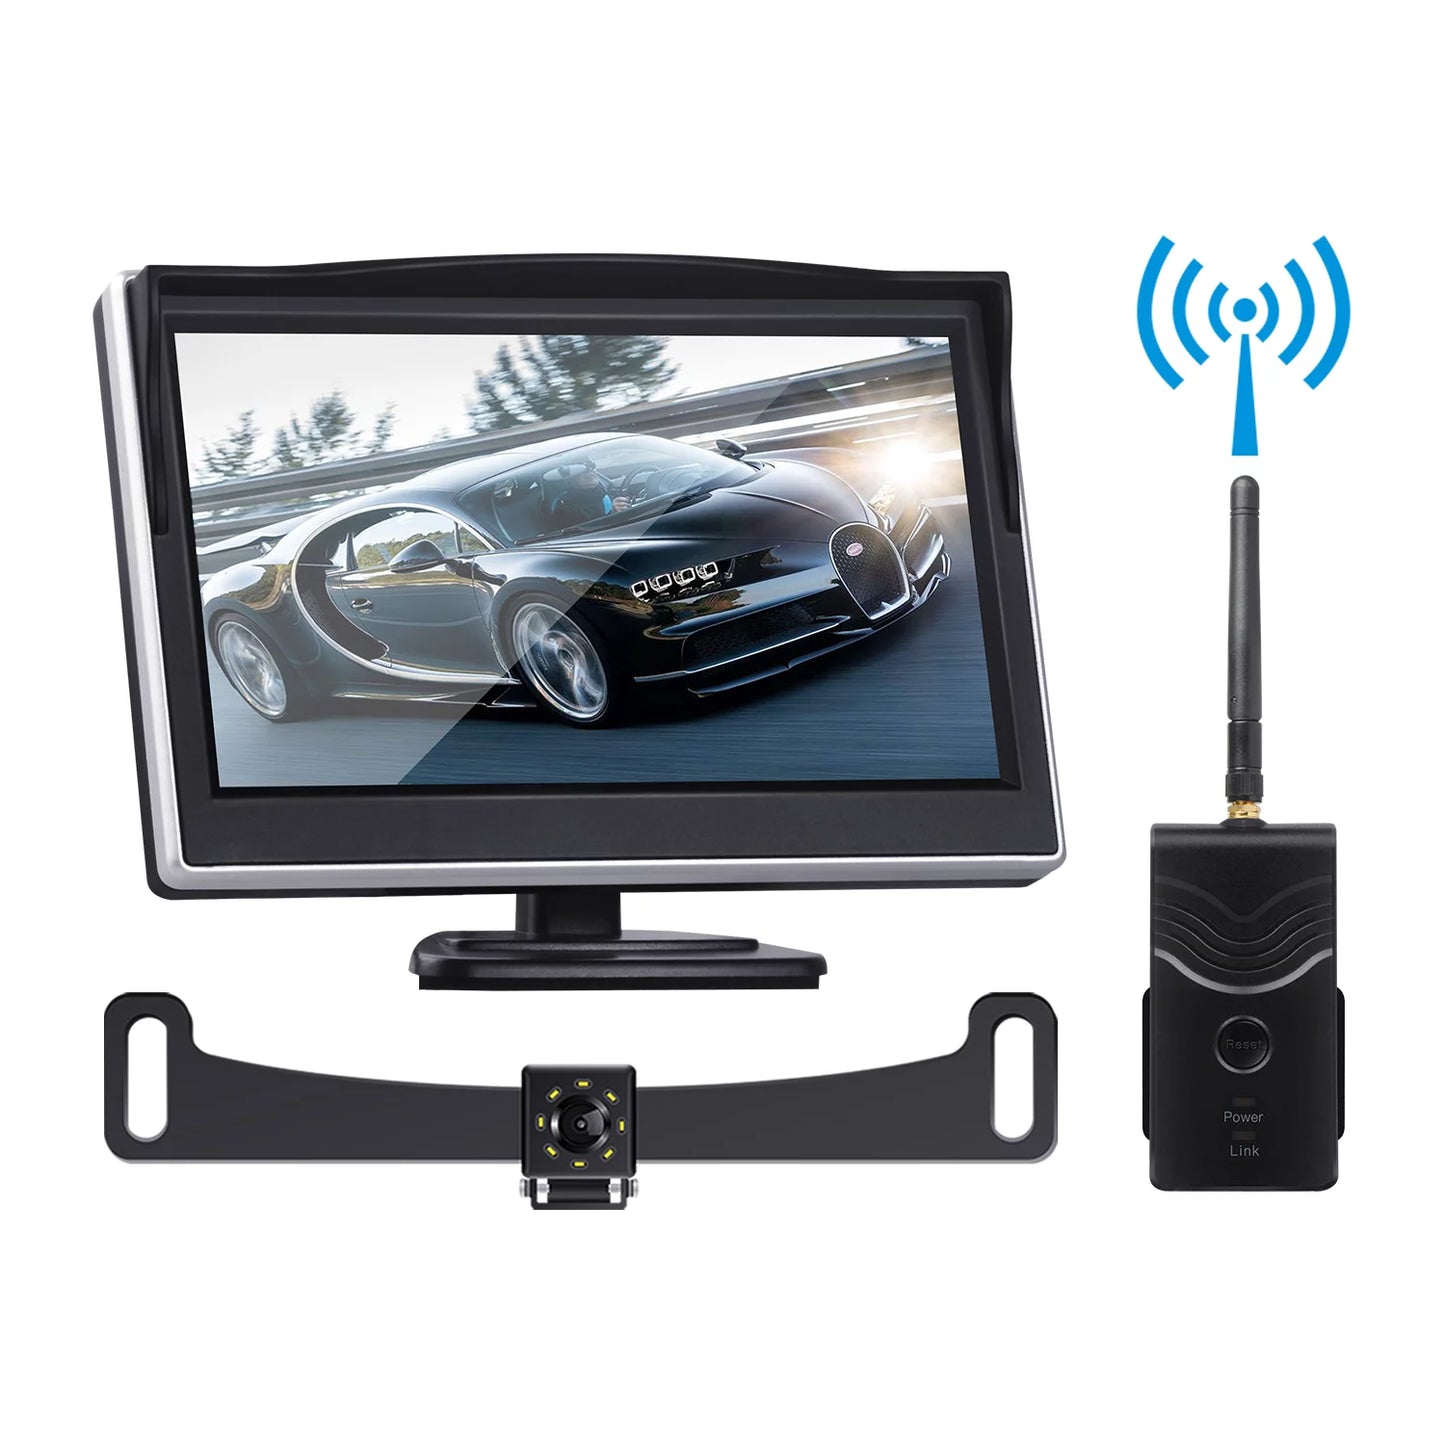 Toguard Reversing Camera Kit, 5'' Car Backup Camera with IR Night Vision for Cars Trucks Van Large Vehicles